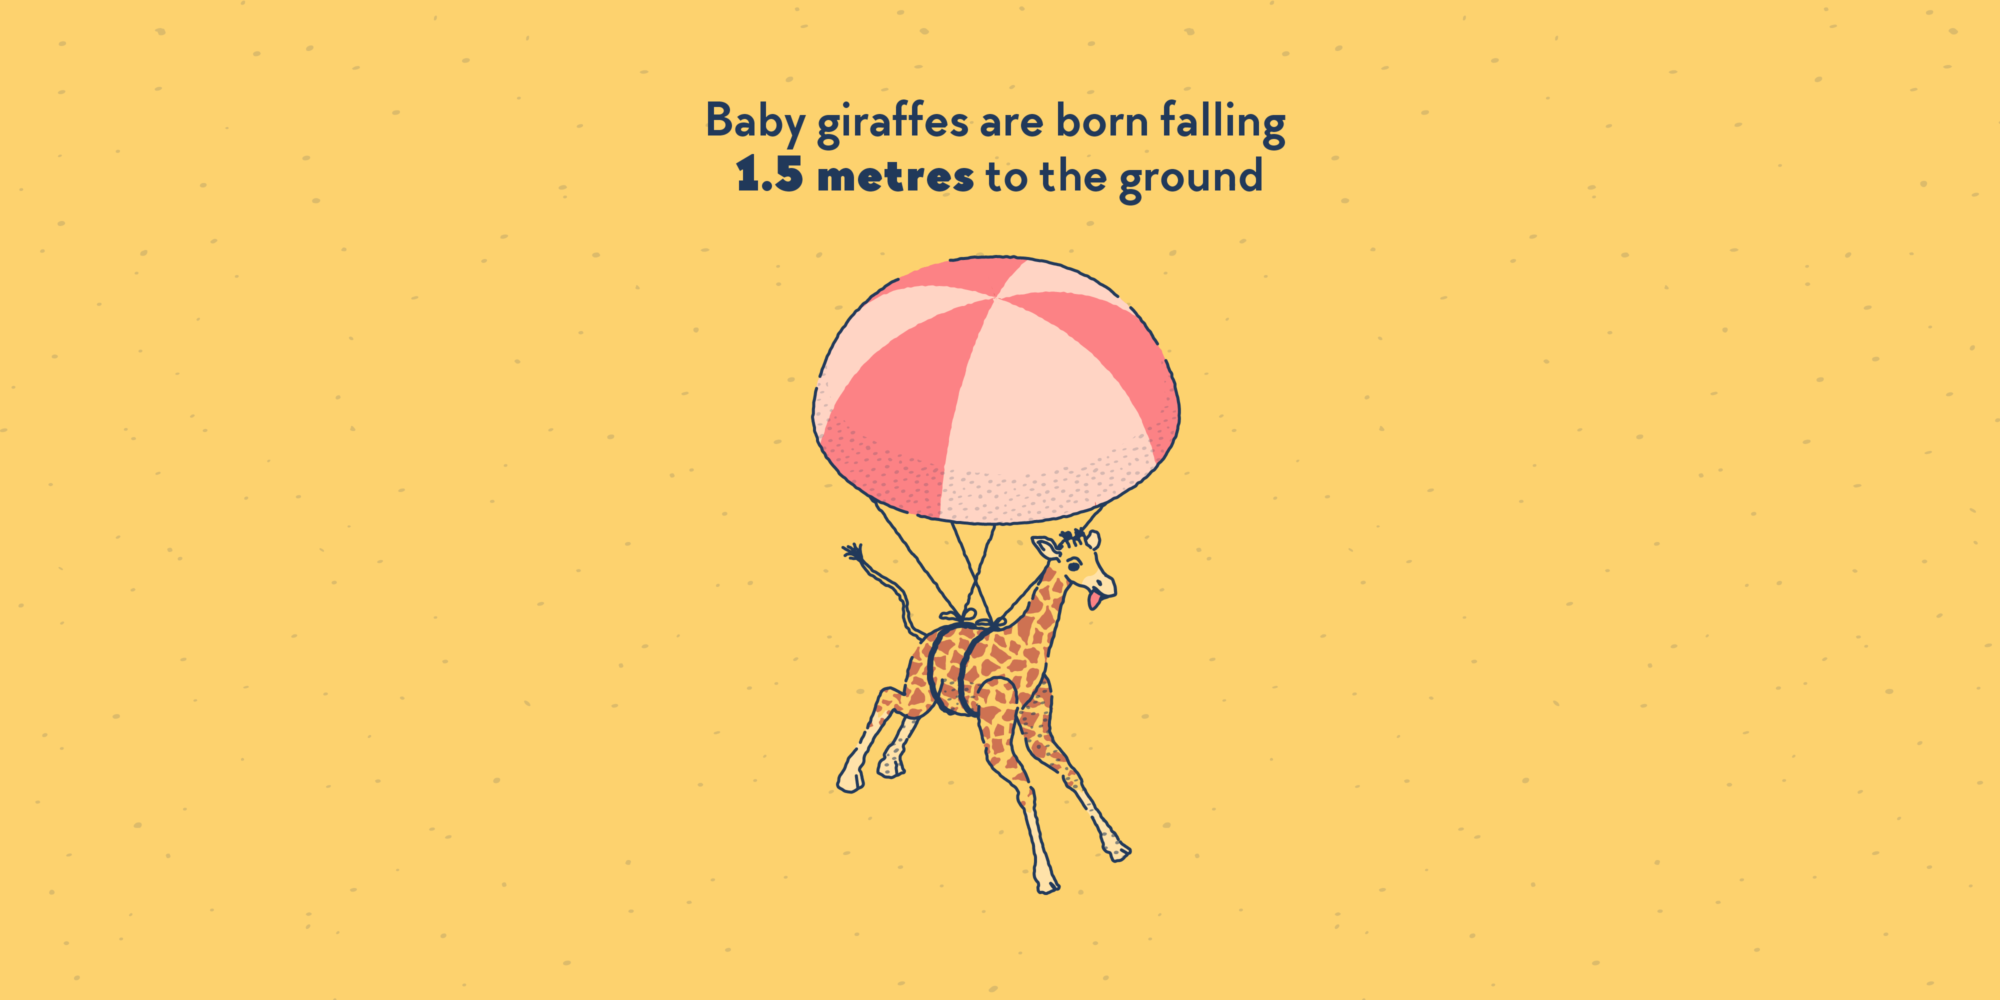 A newborn giraffe, falling with a parachute.